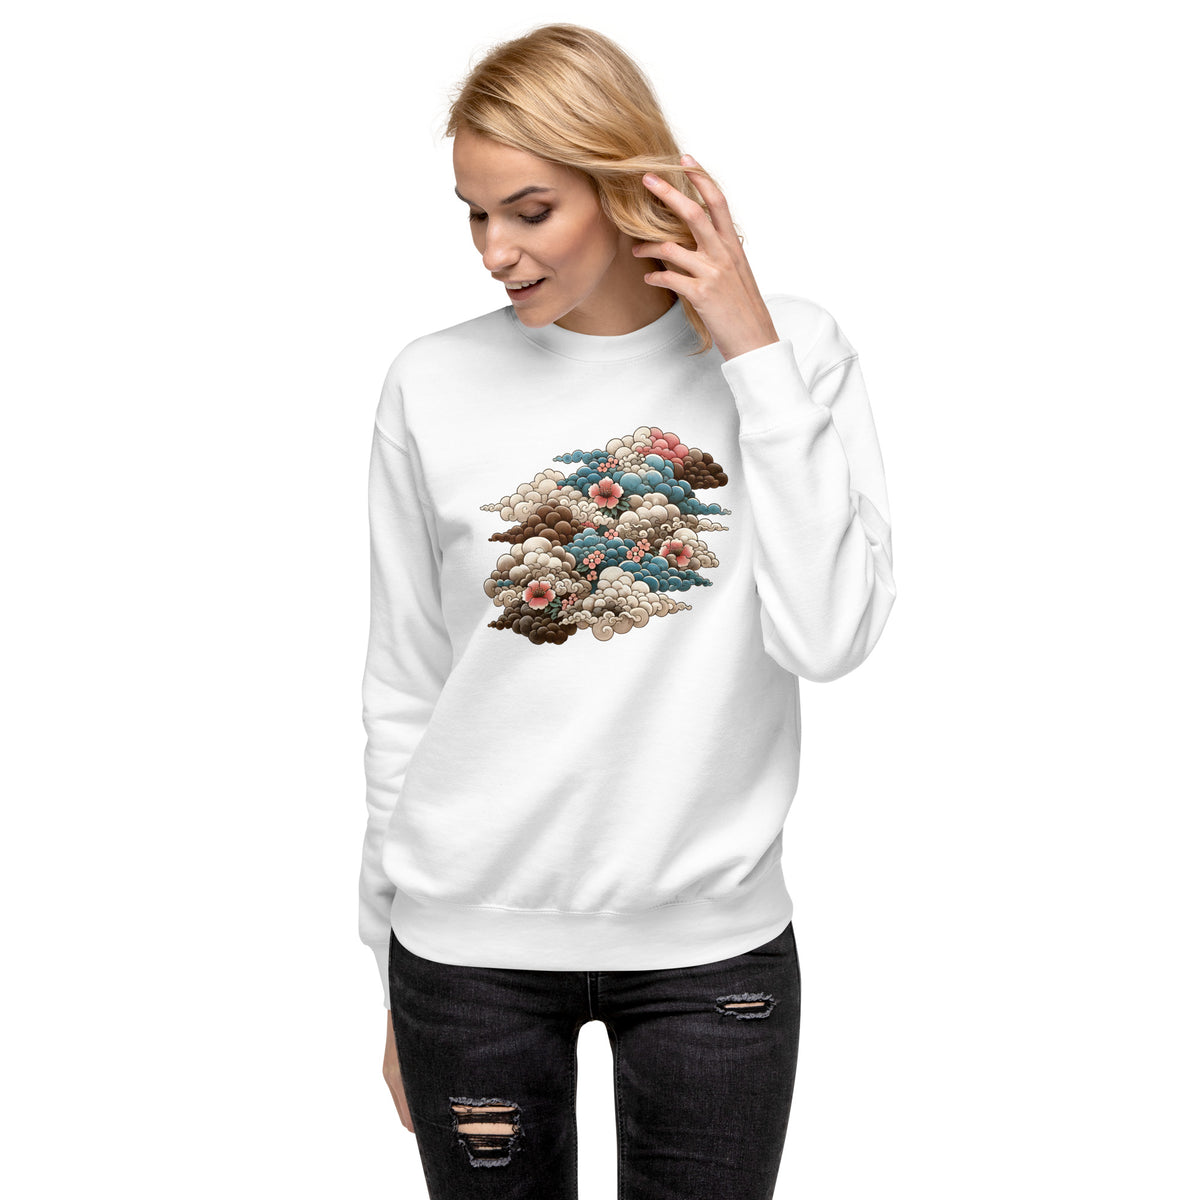 Japanese Flowers and Clouds Illustration | Unisex Premium Sweatshirt